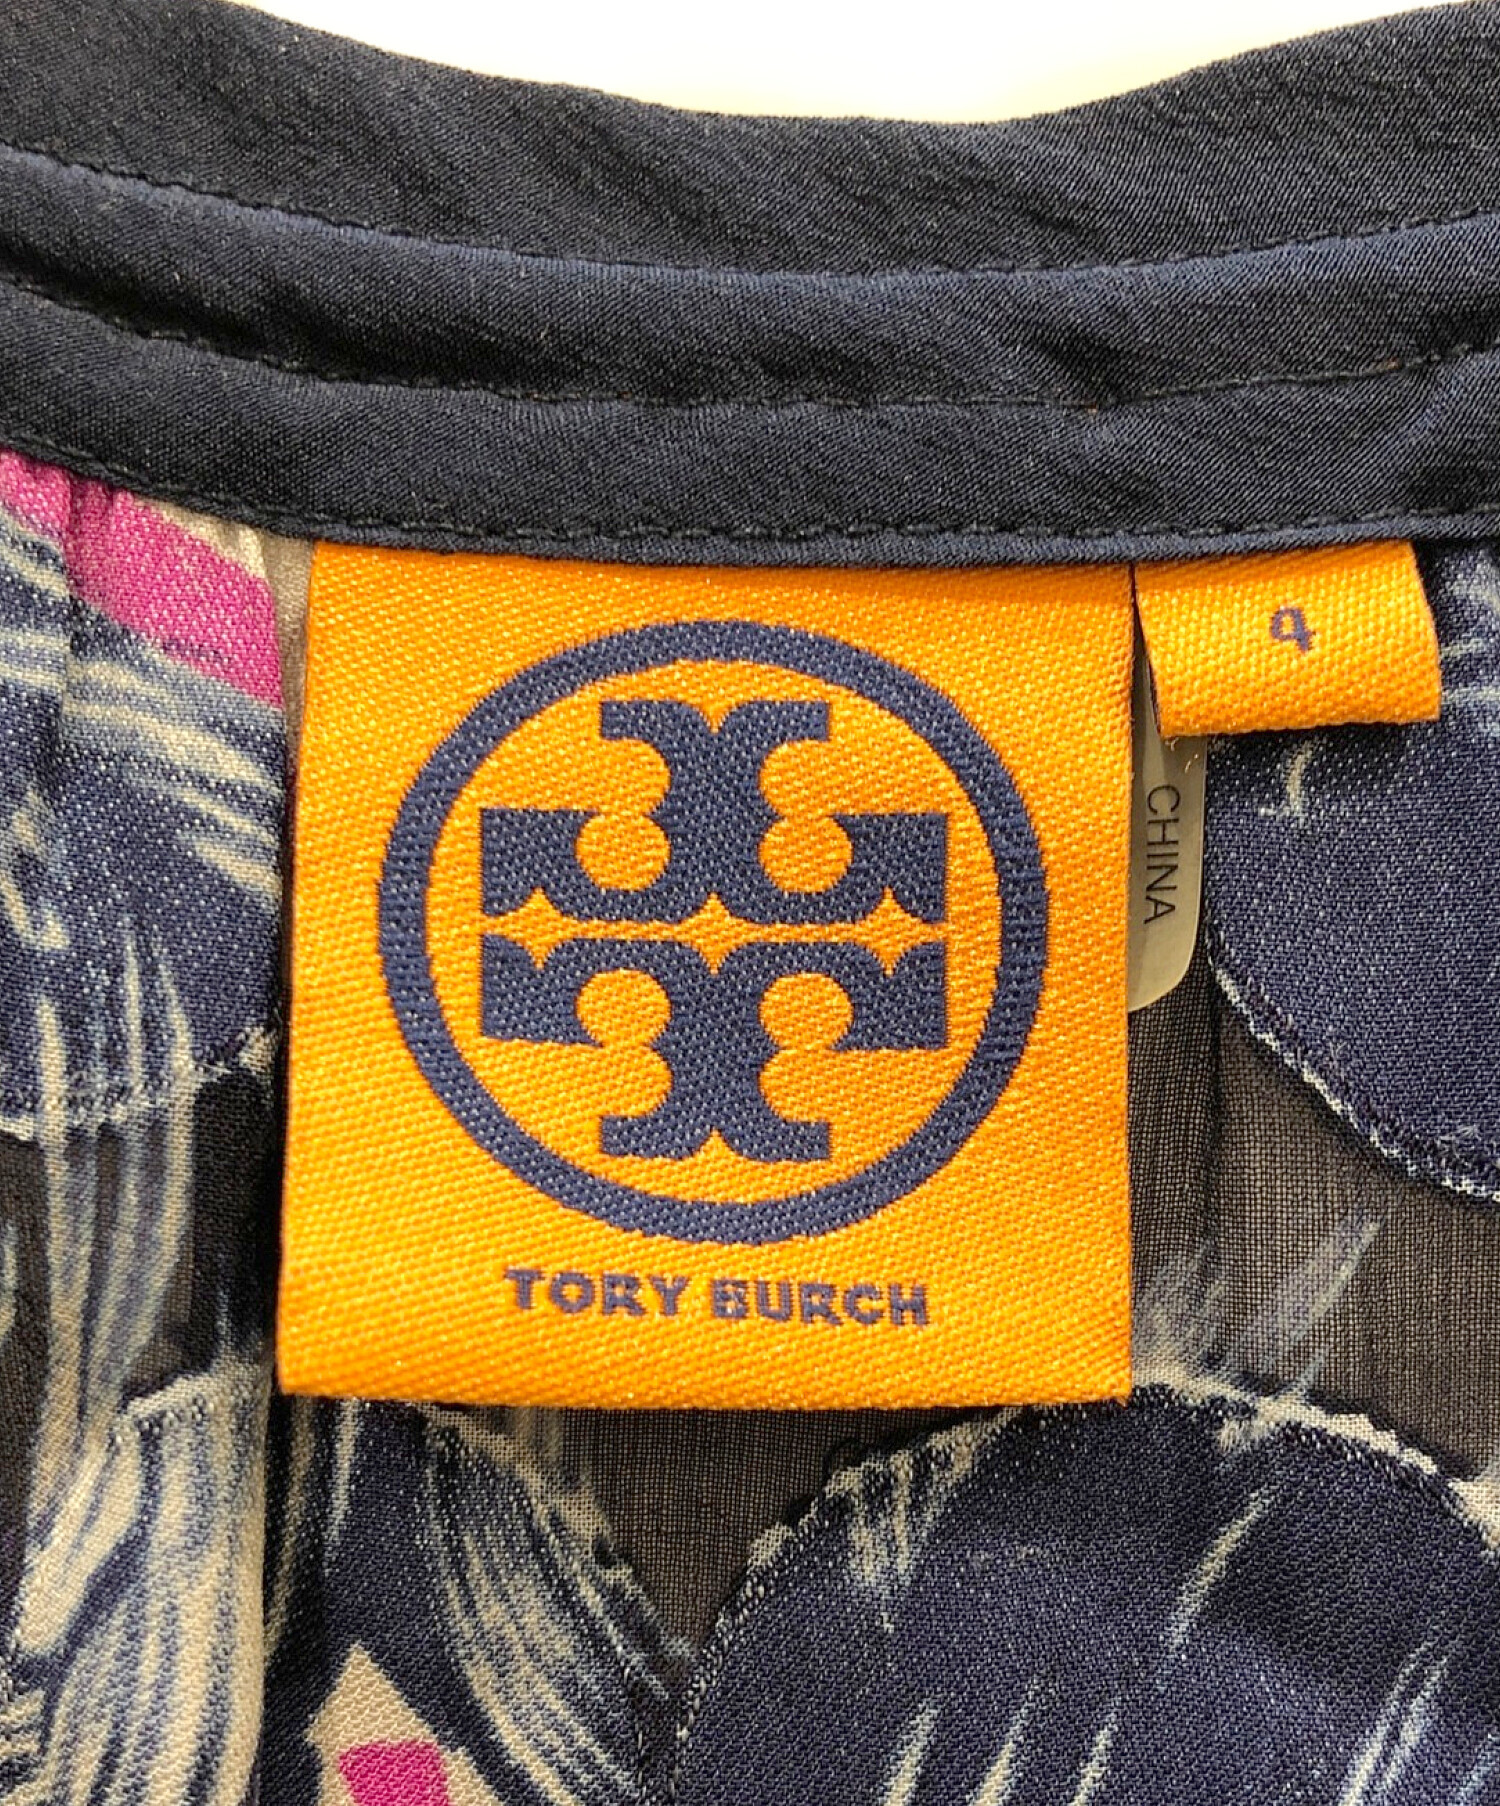 TORY BURCH (トリーバーチ) 総柄シルク混ワンピース ネイビー サイズ:4